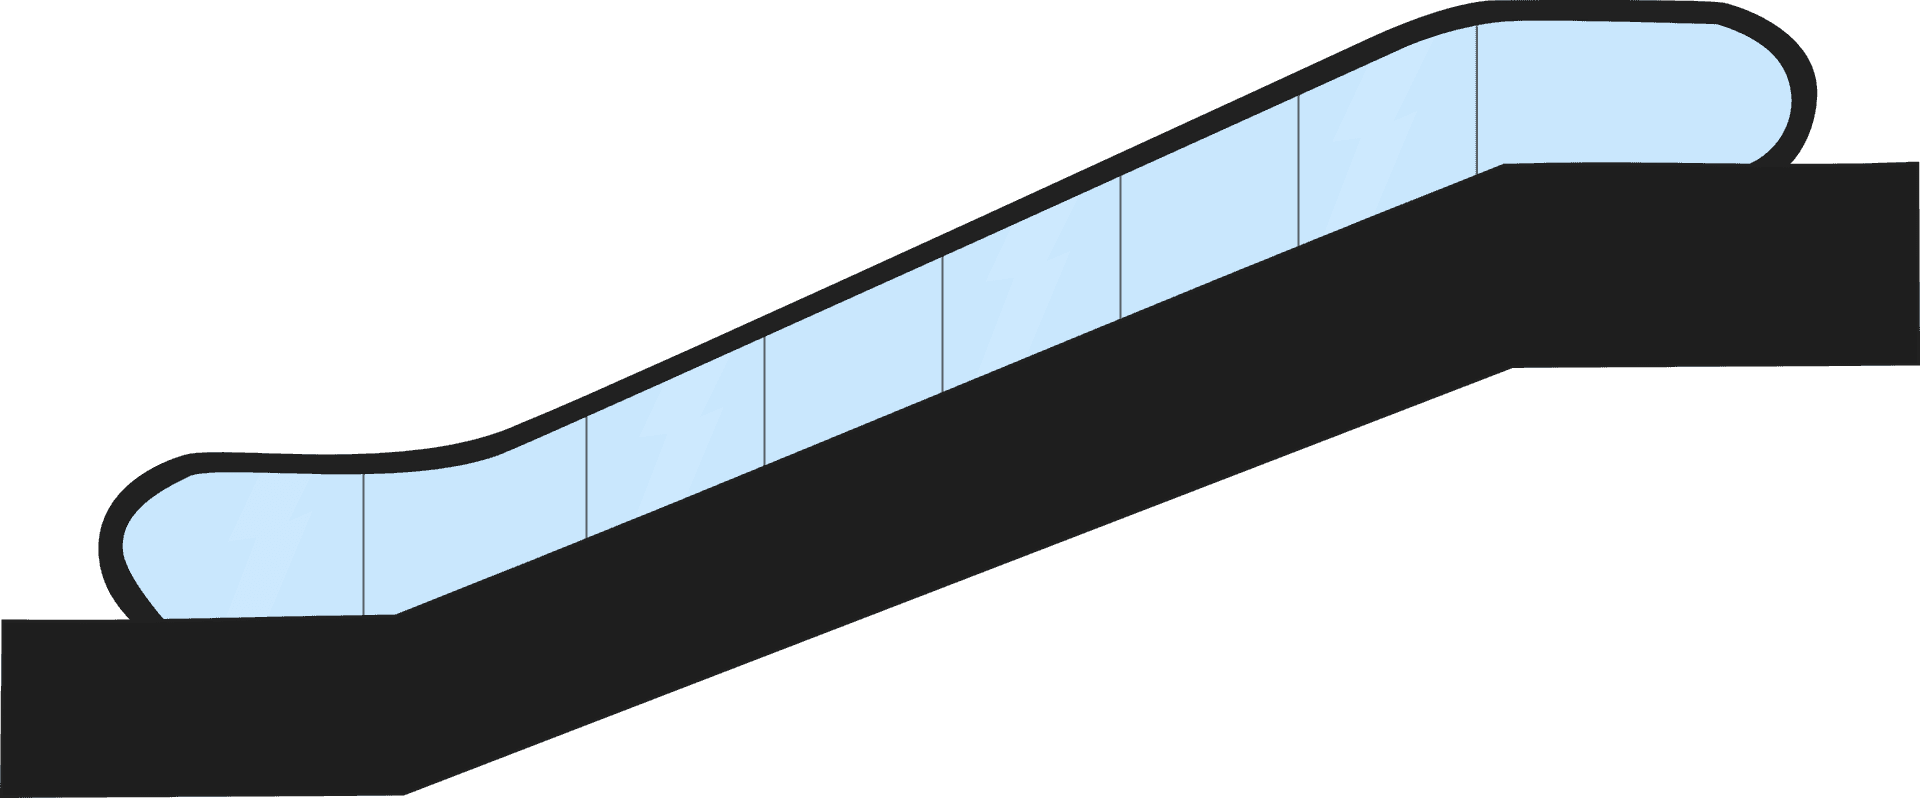 Modern Escalator Graphic PNG image